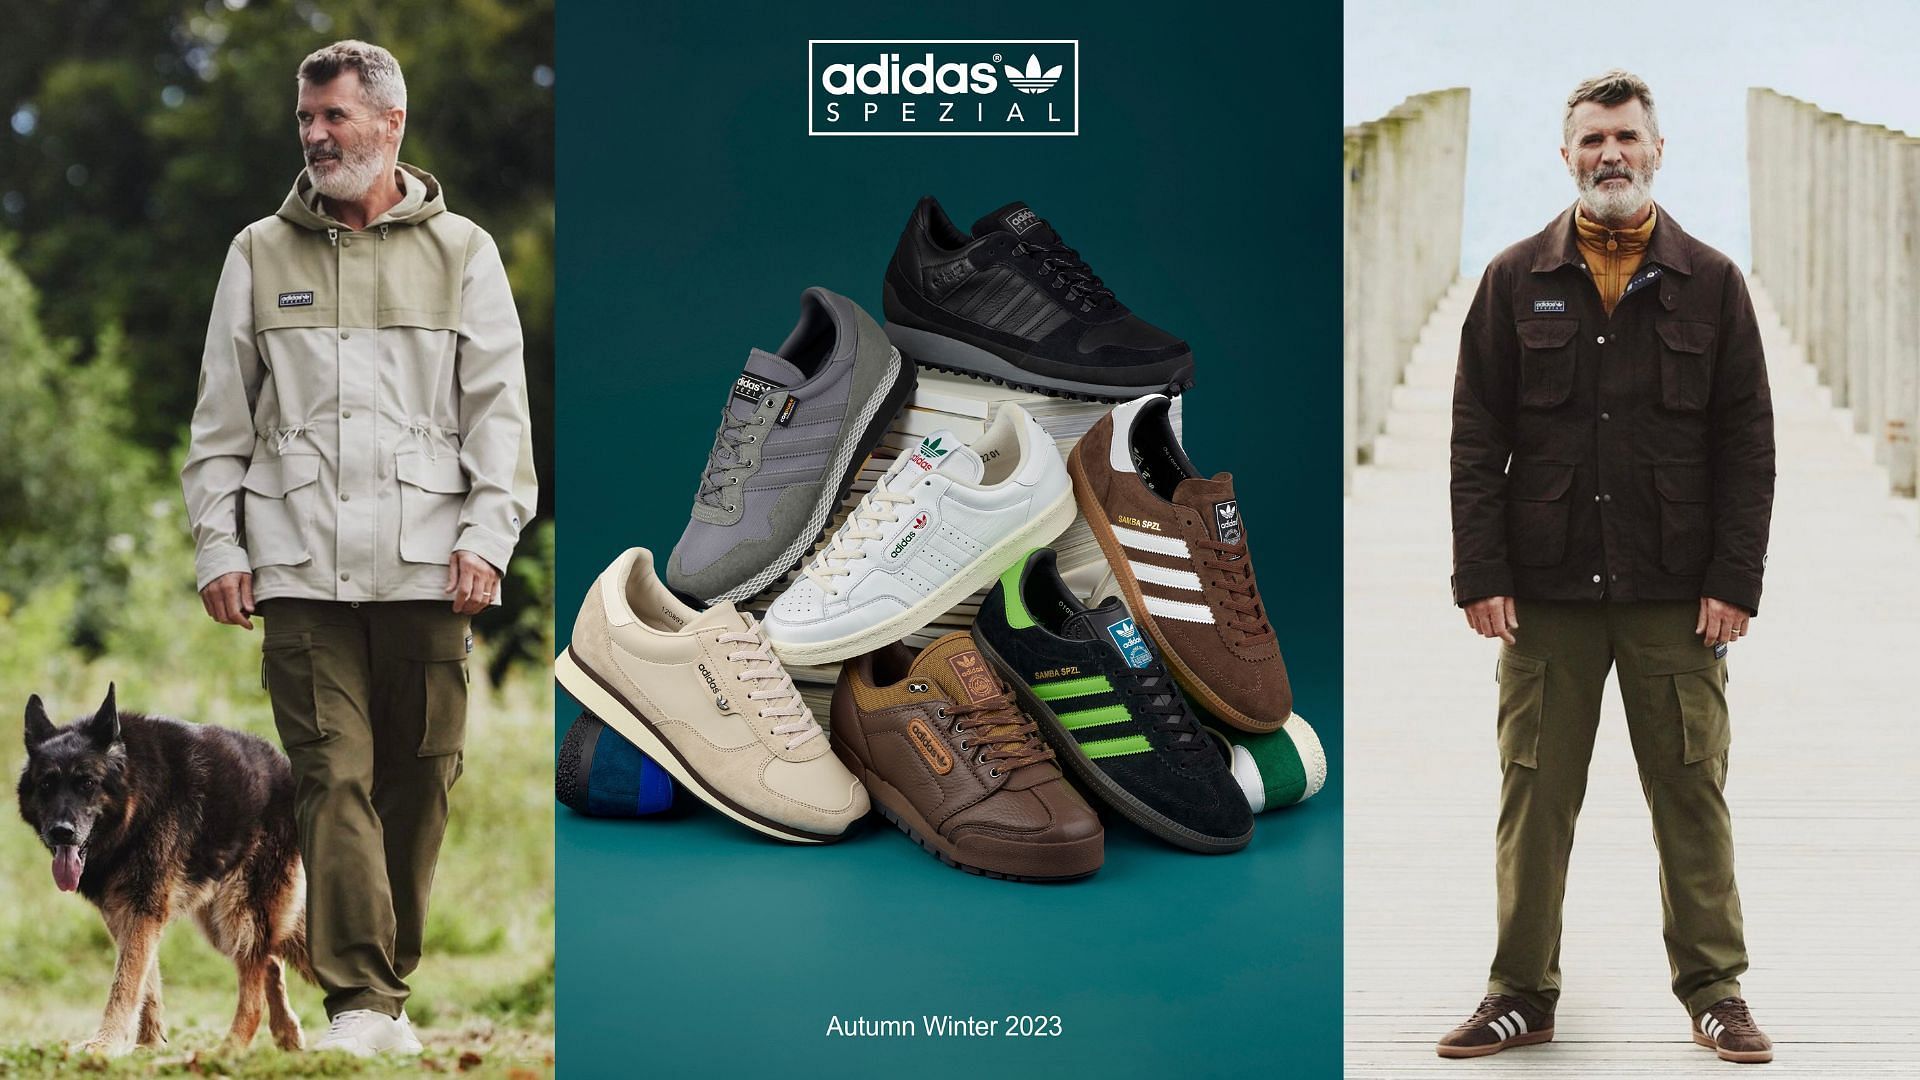 Adidas Spezial Autumn Winter 2023 collection (Image via Adidas)